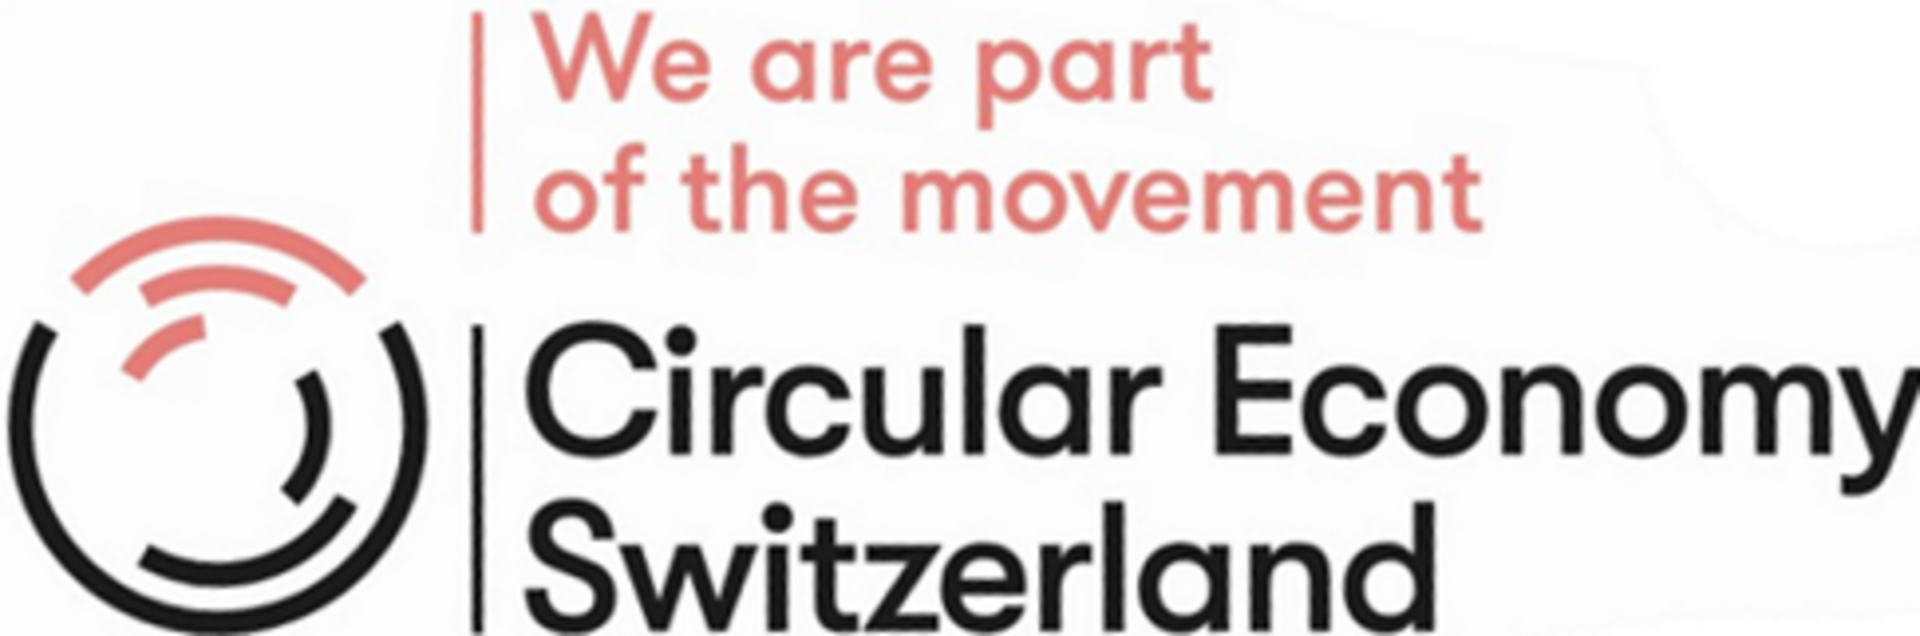 Circular Economy Switzerland